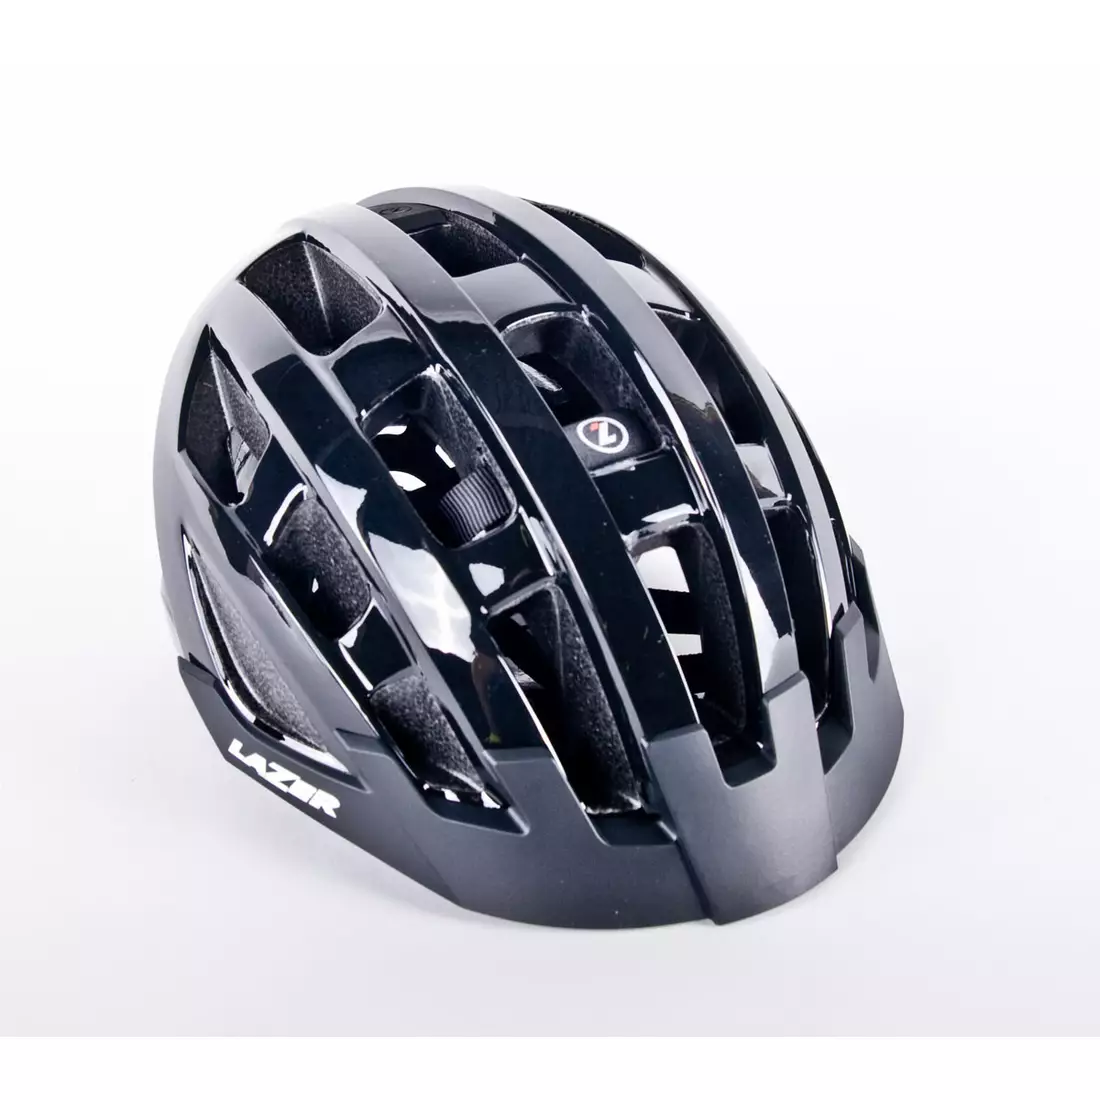 LAZER Compact bicycle helmet black